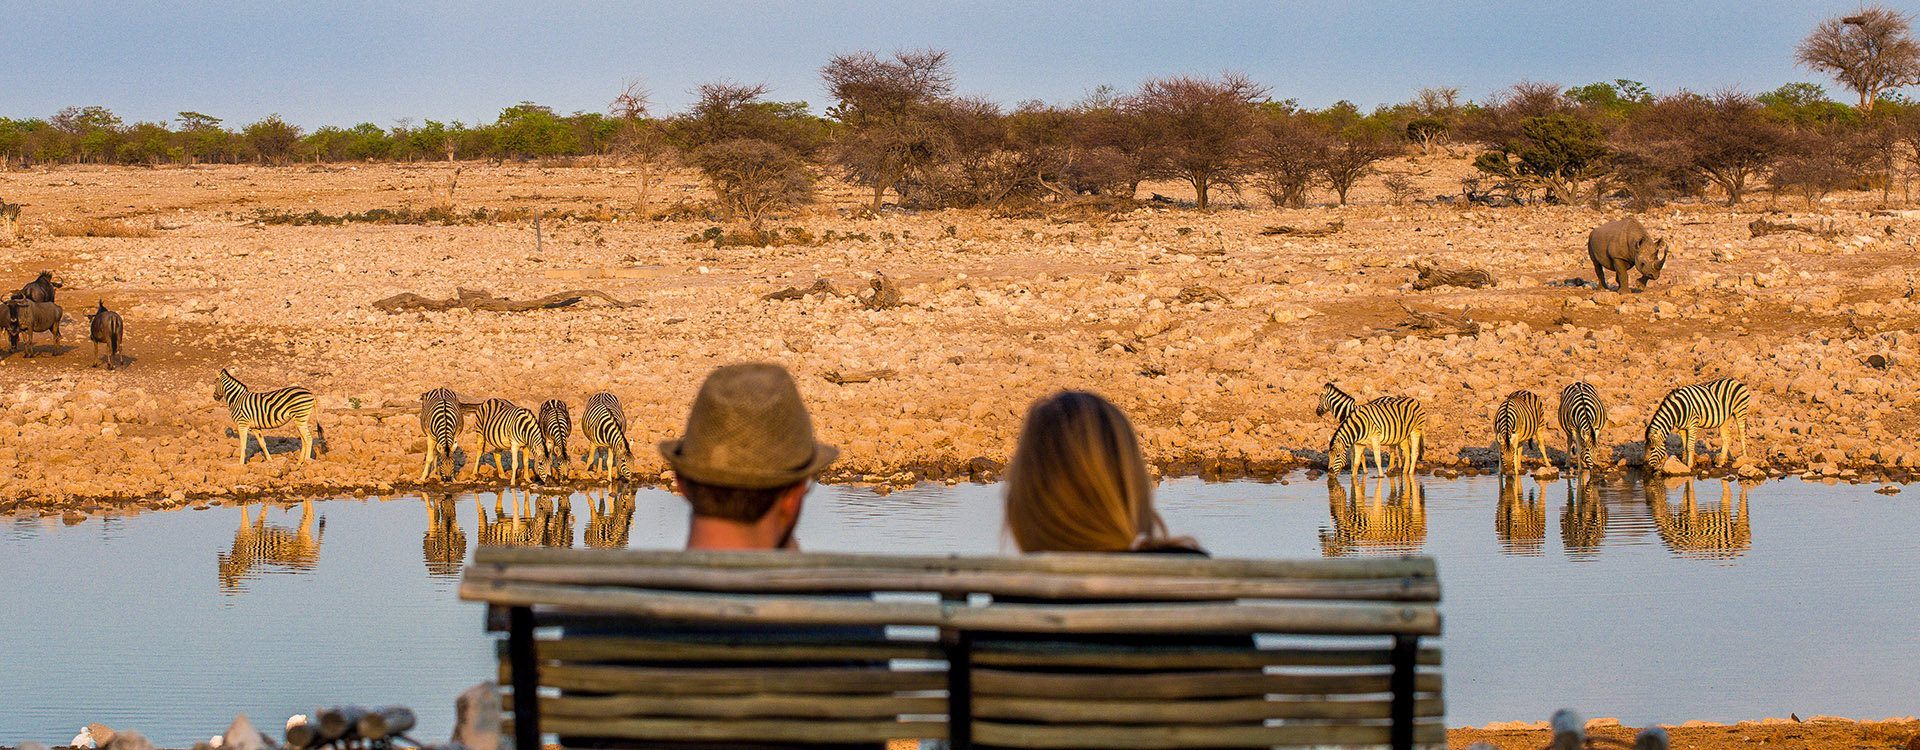 Couple sat looking over waterhole with zebra in Africa